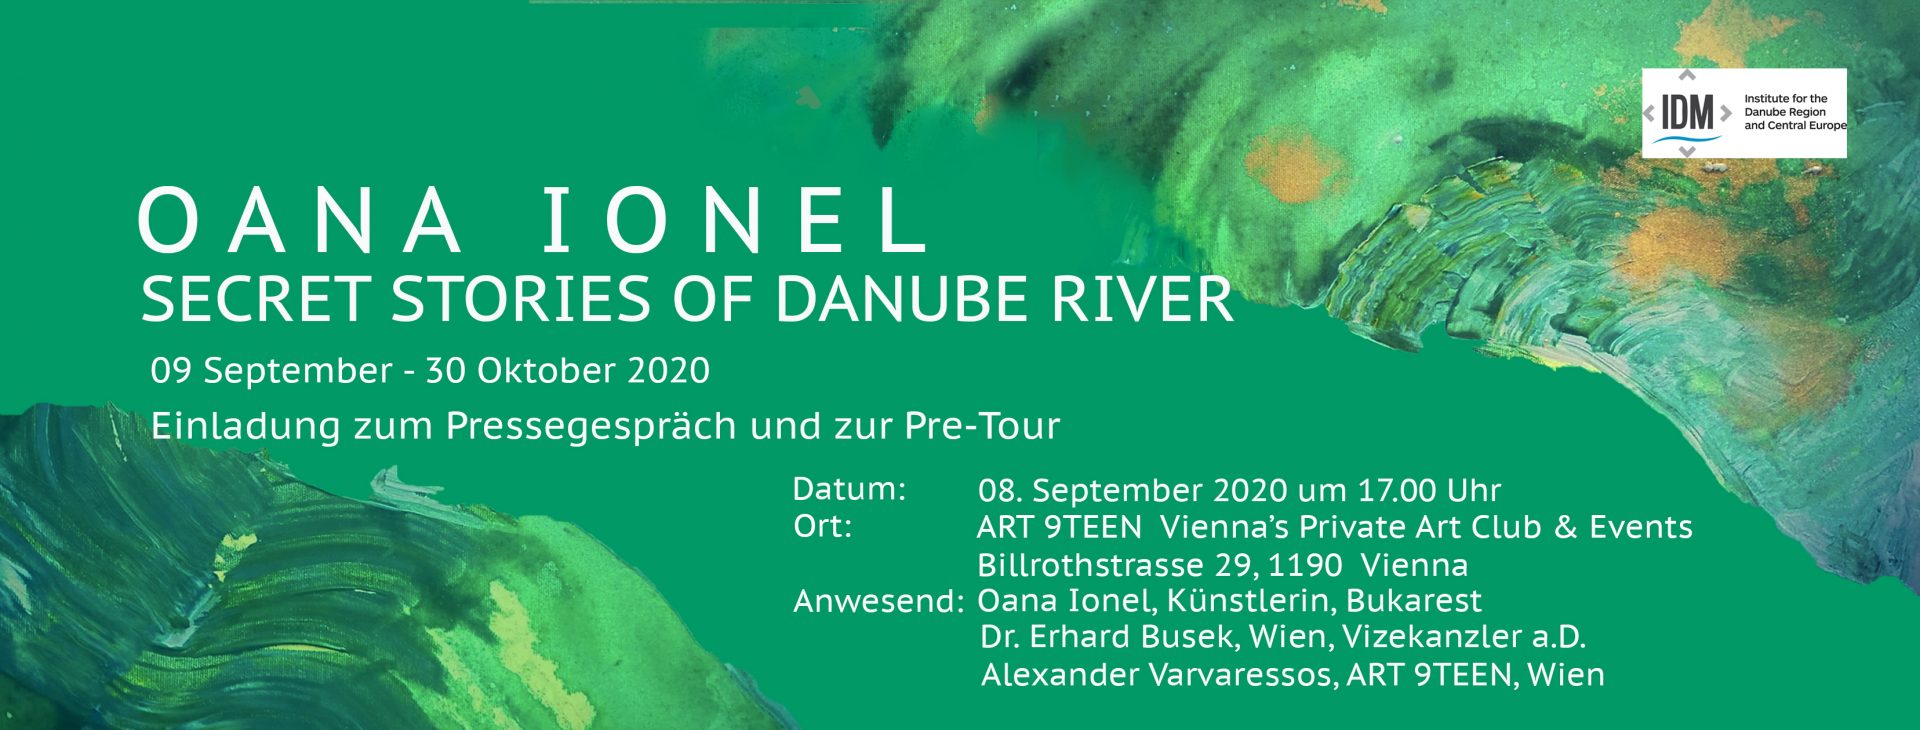 “Secret Stories of Danube River” – Oana Ionel